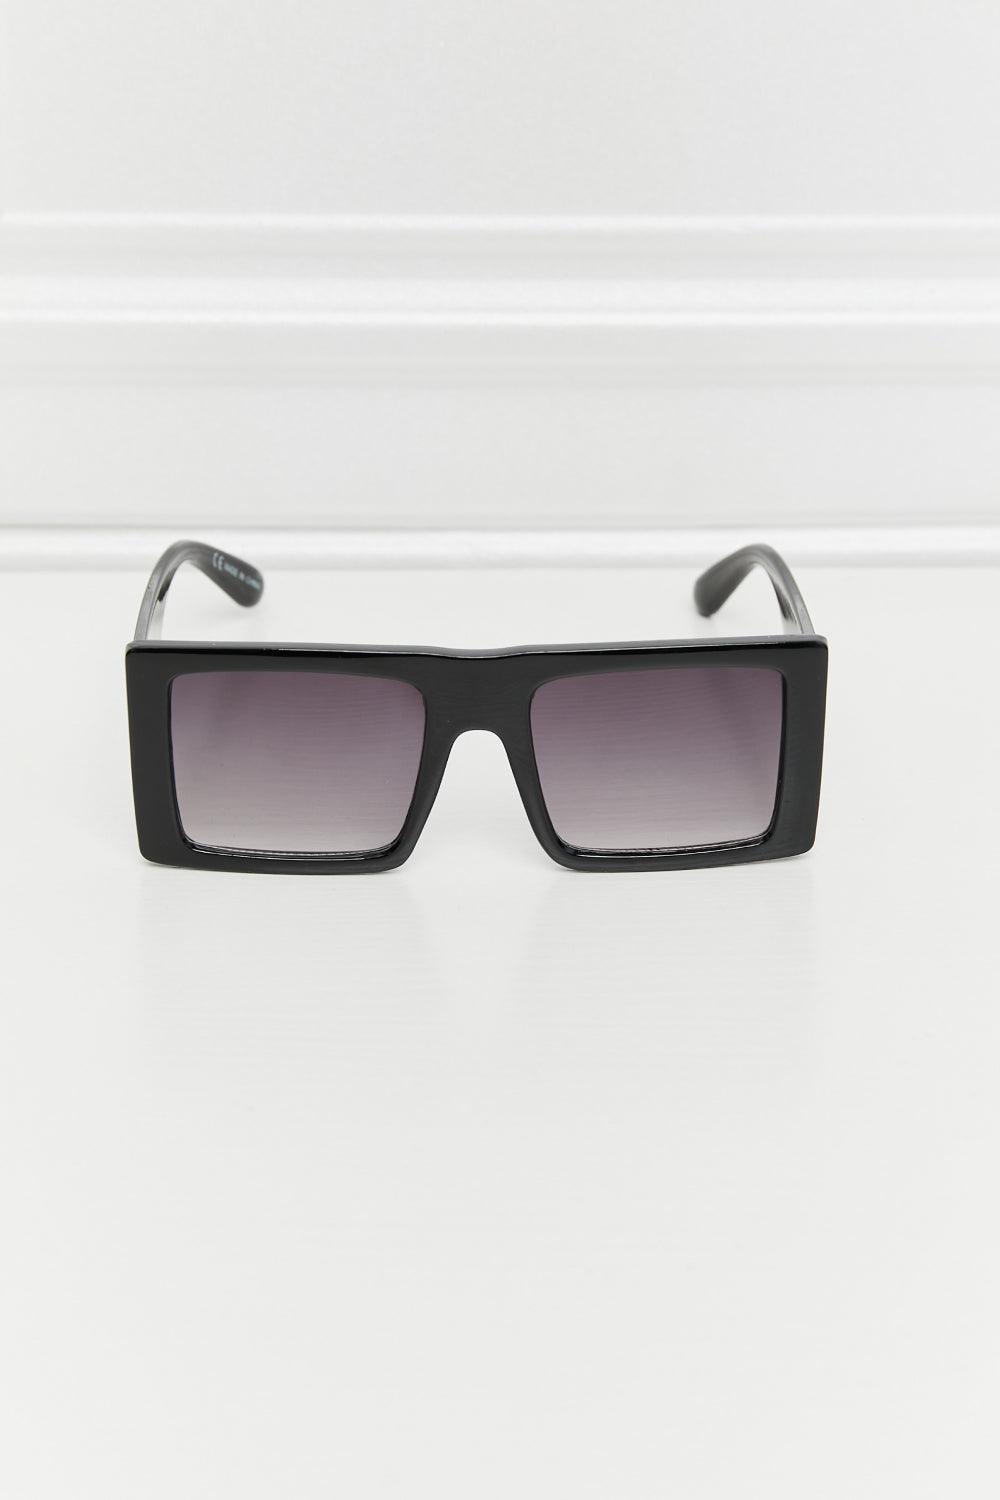 Square Polycarbonate Sunglasses - Perfect Accessory for Women